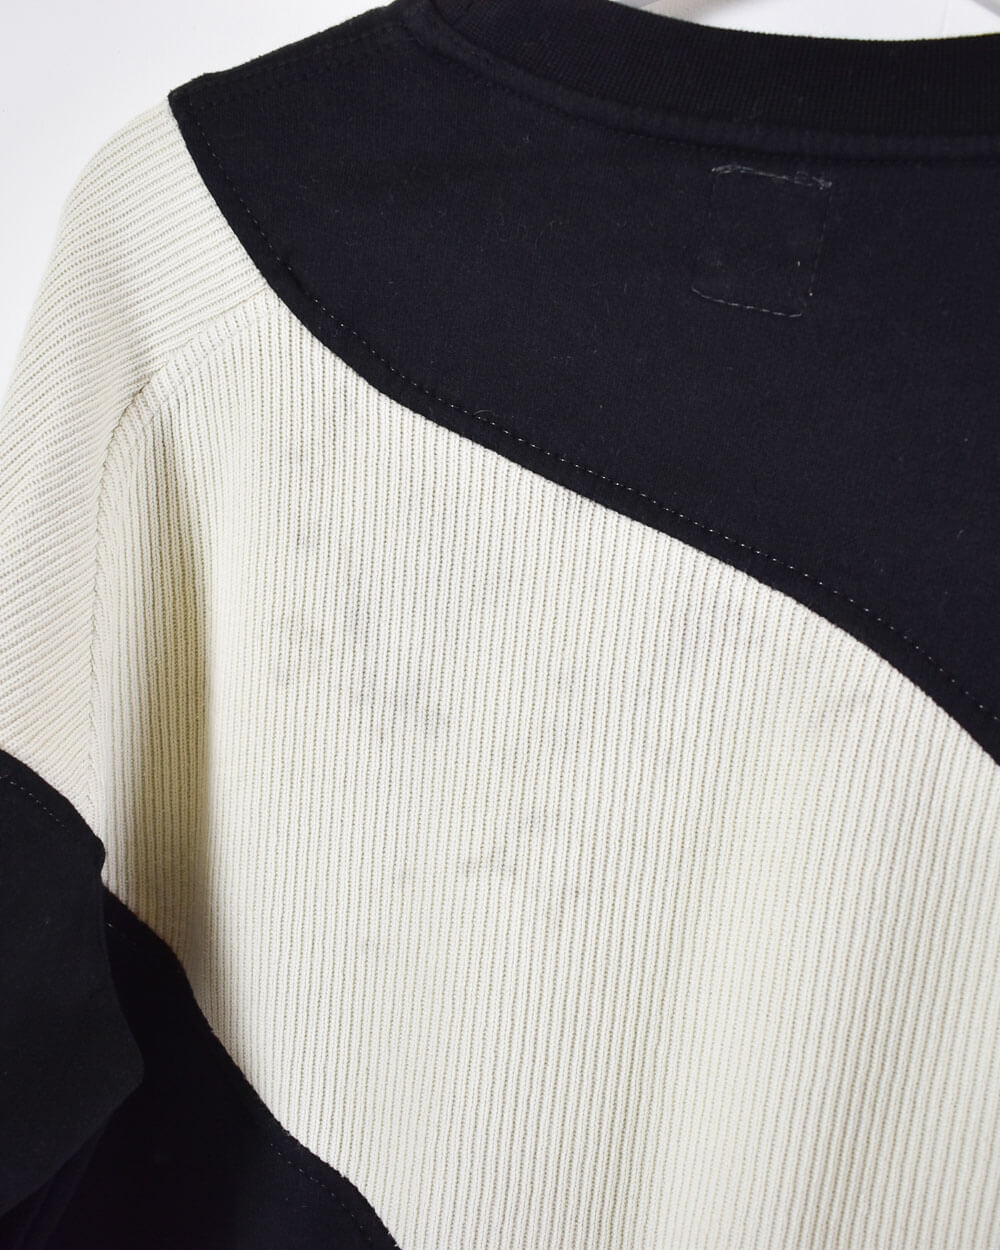 White Nike Rework Sweatshirt - Small